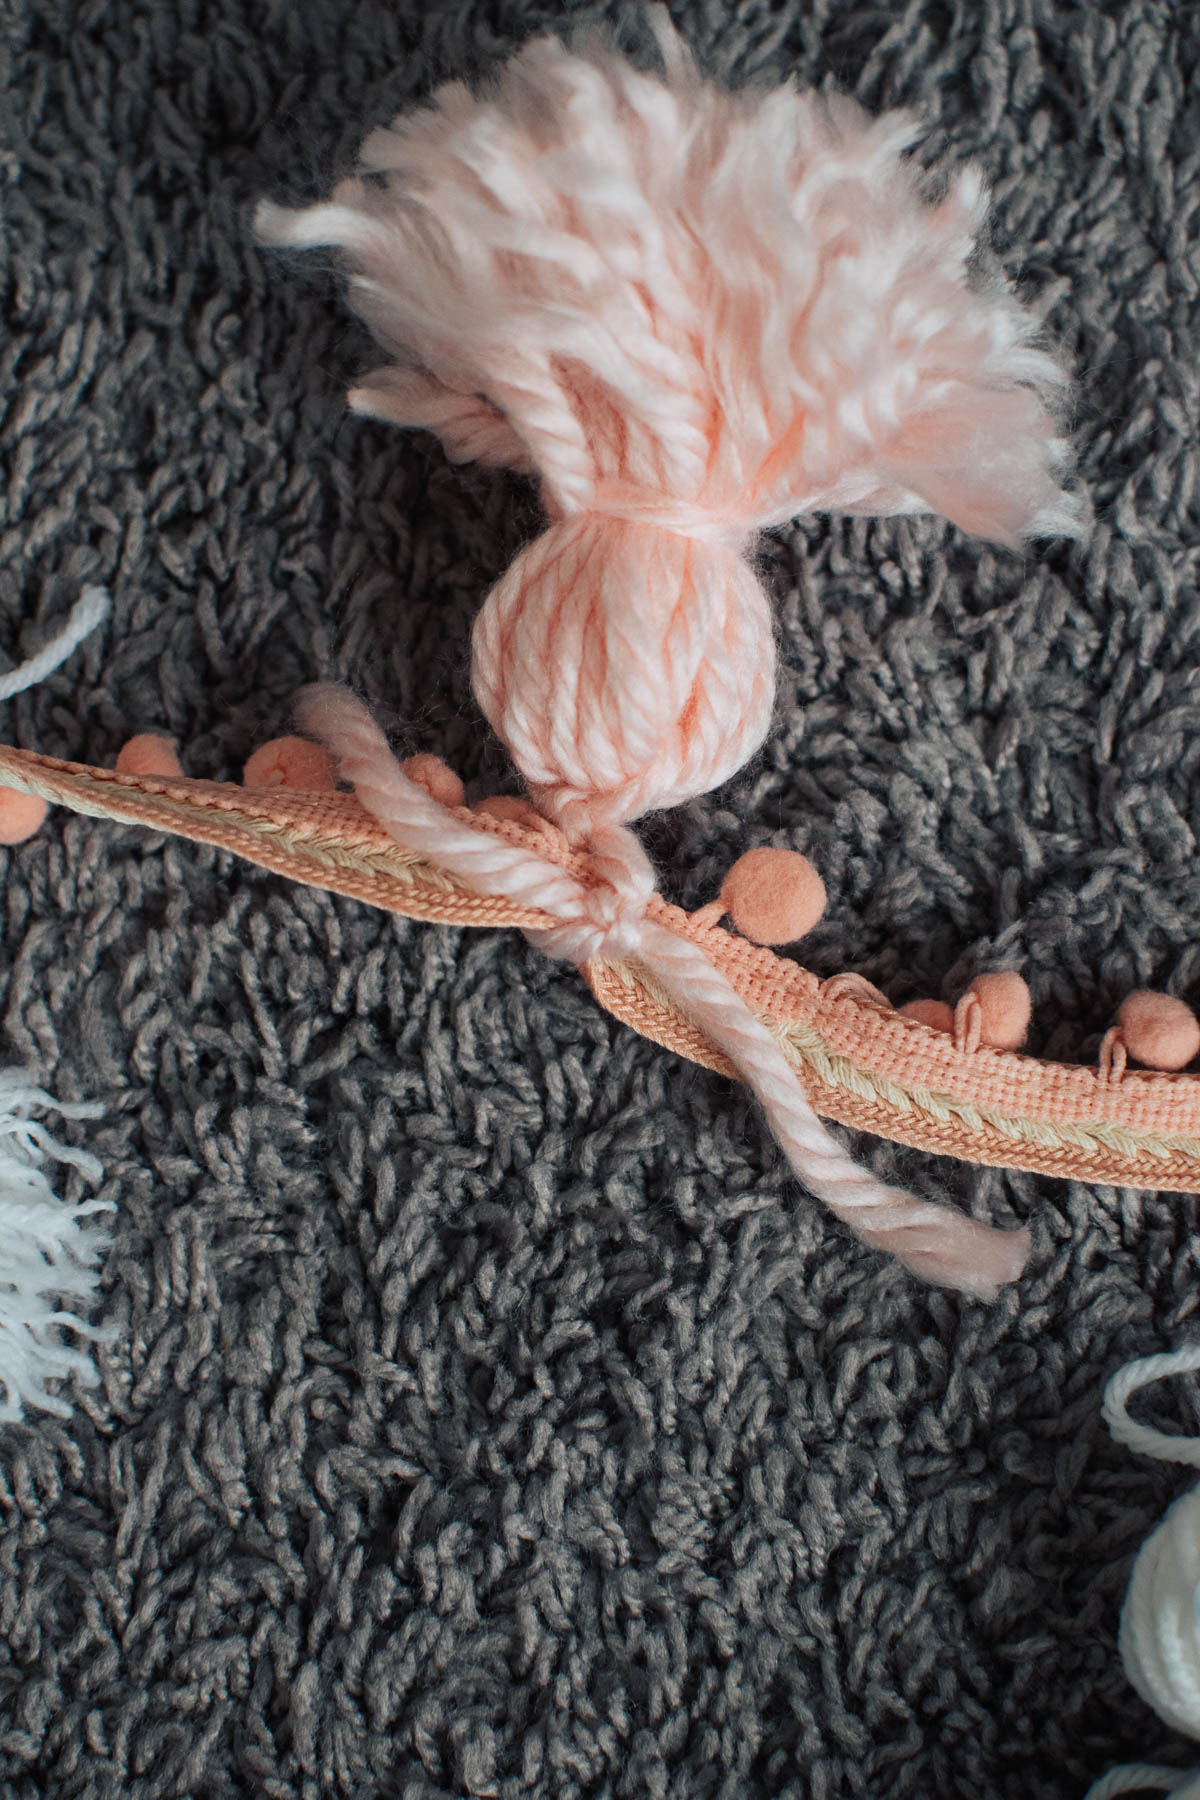 String from yarn ghost tied in knot on pom pom trim.